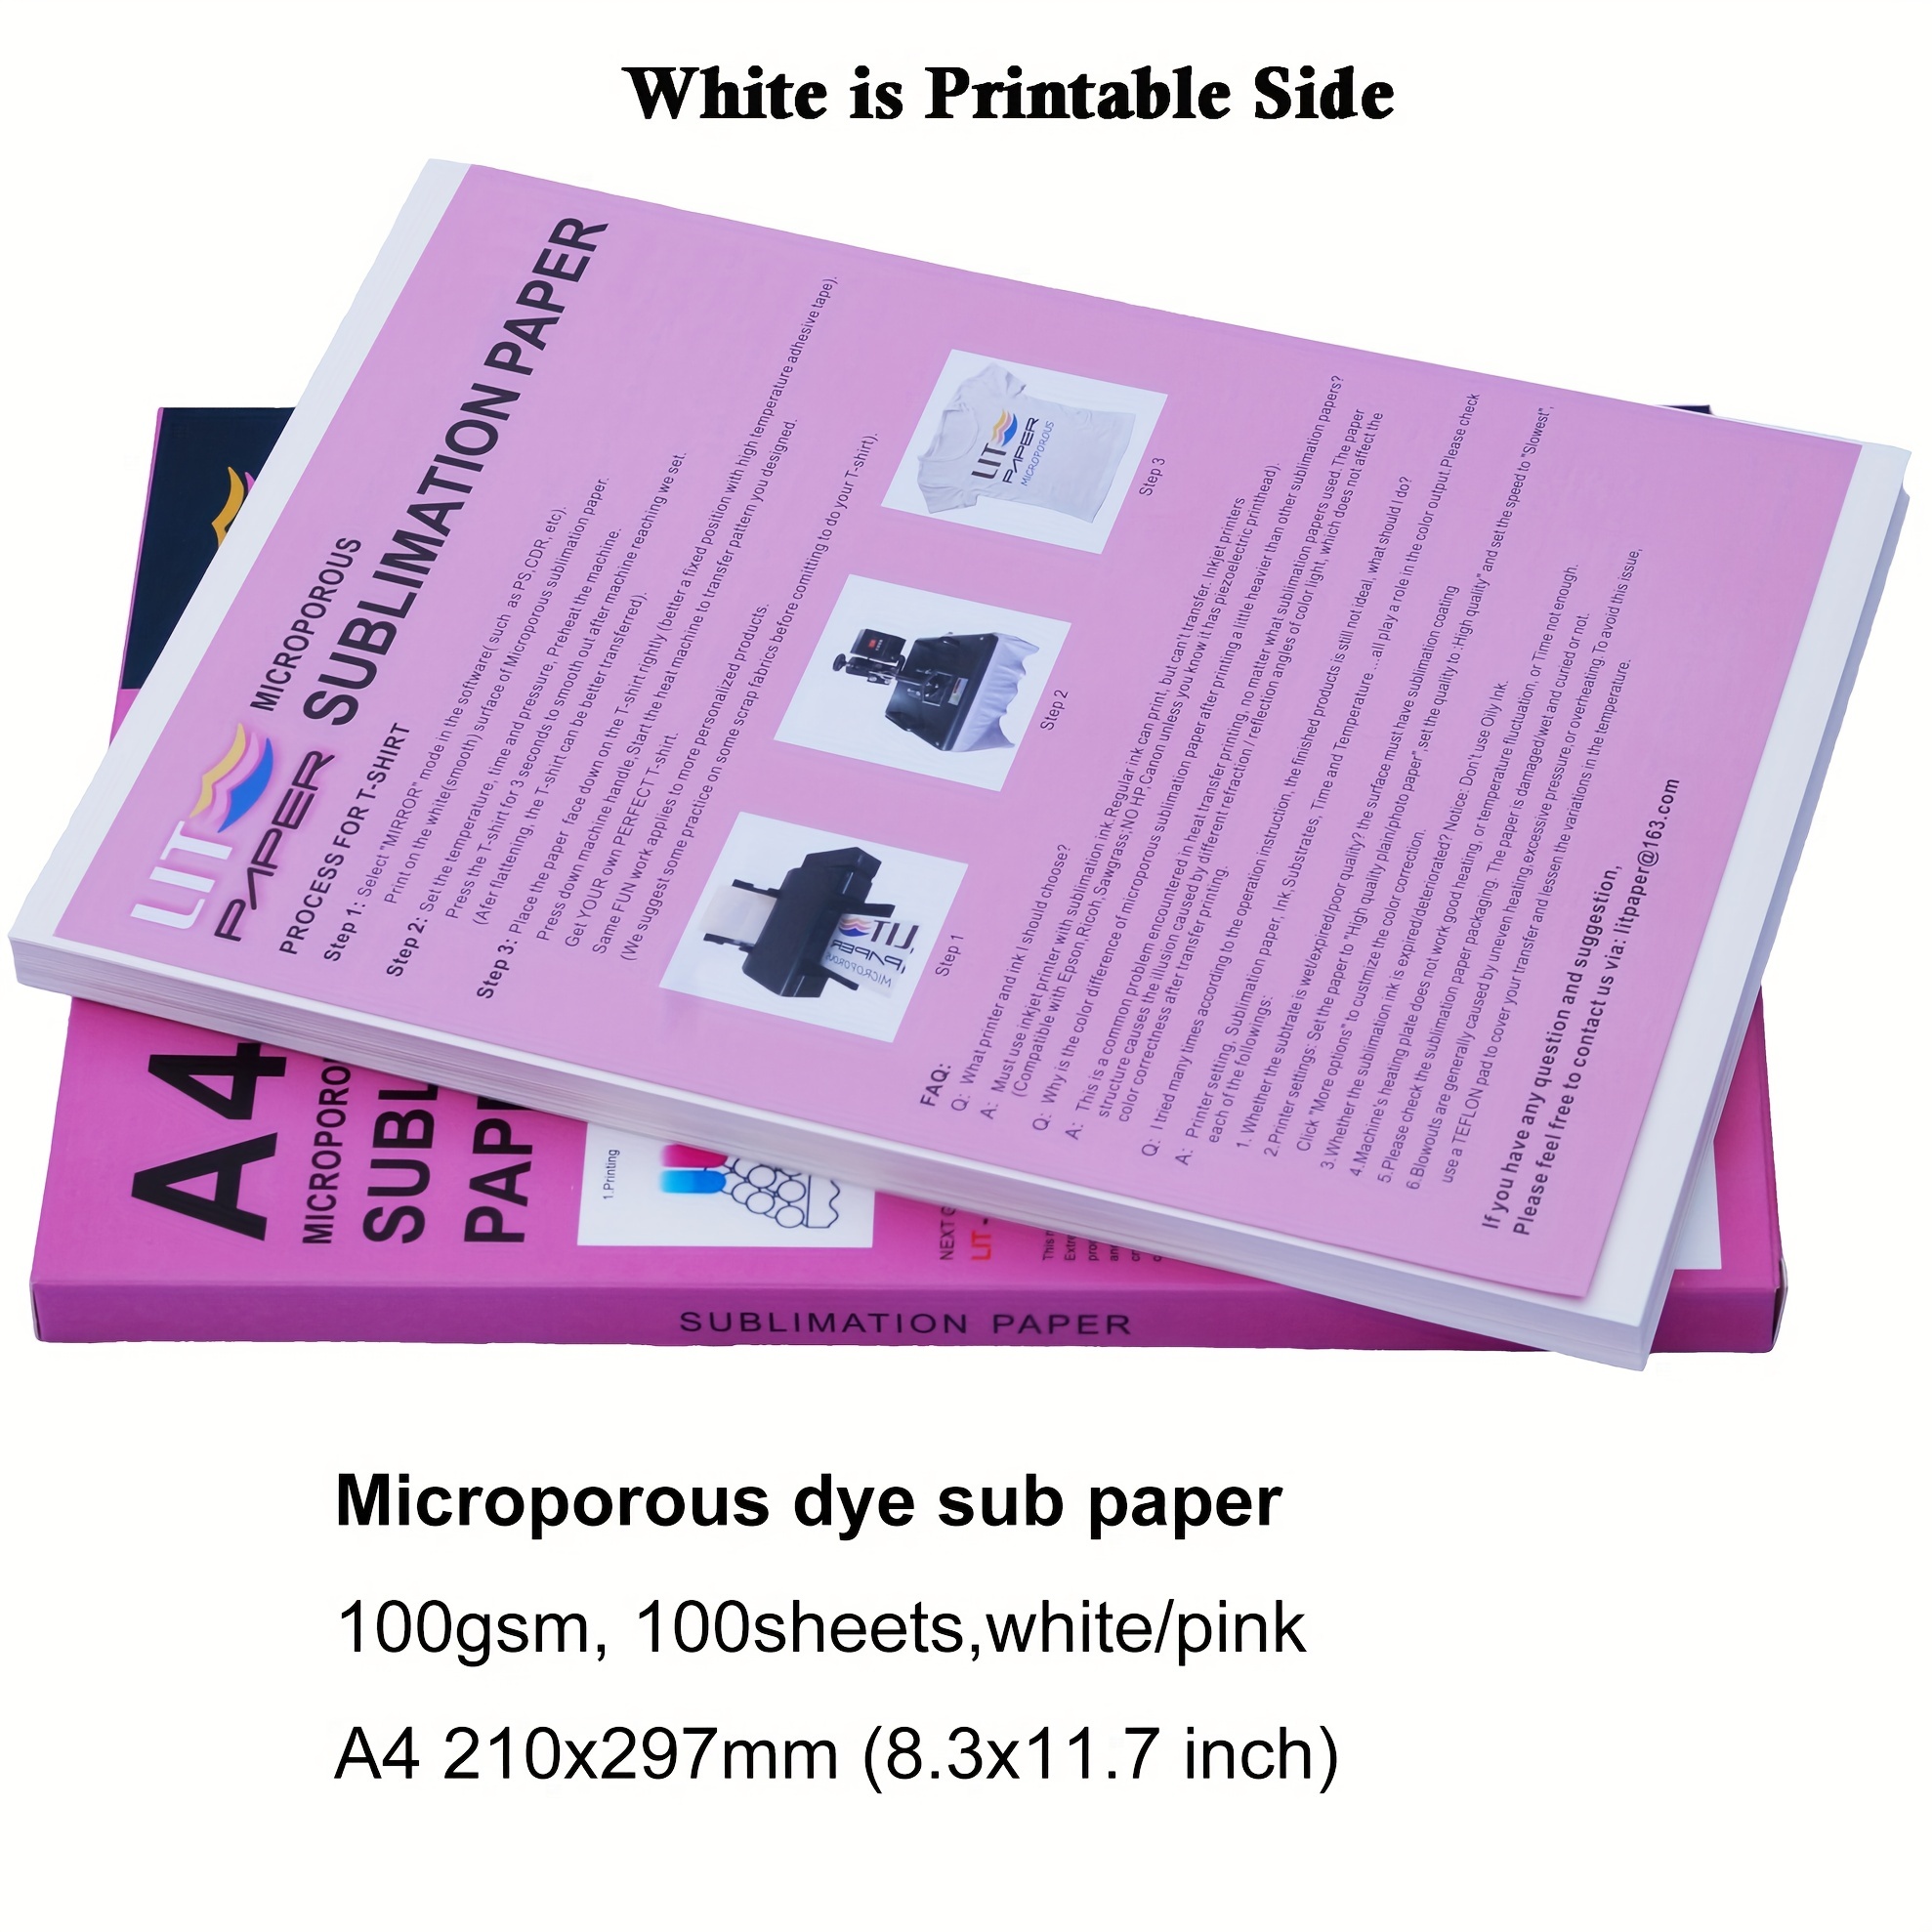 Koalapaper Fast Dry Sublimation Paper